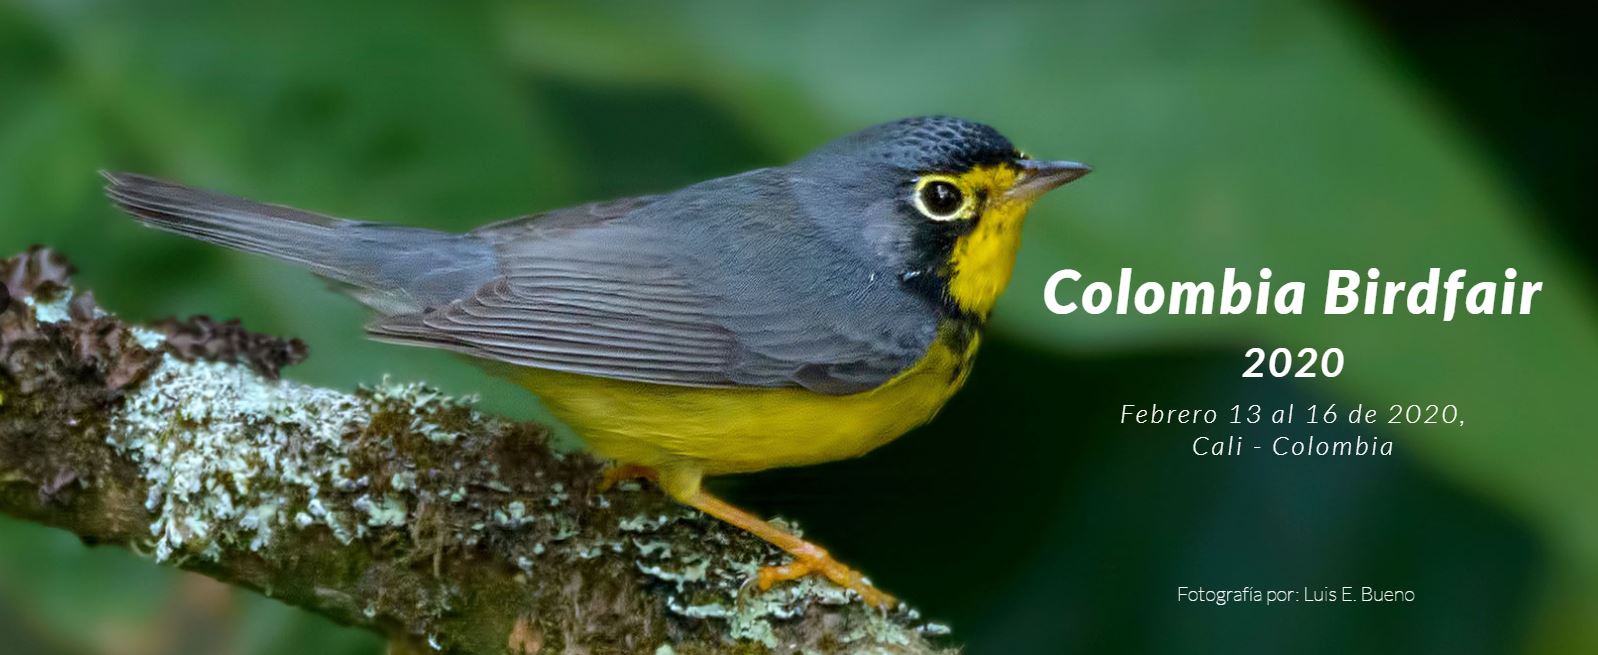 colombiabirdfair